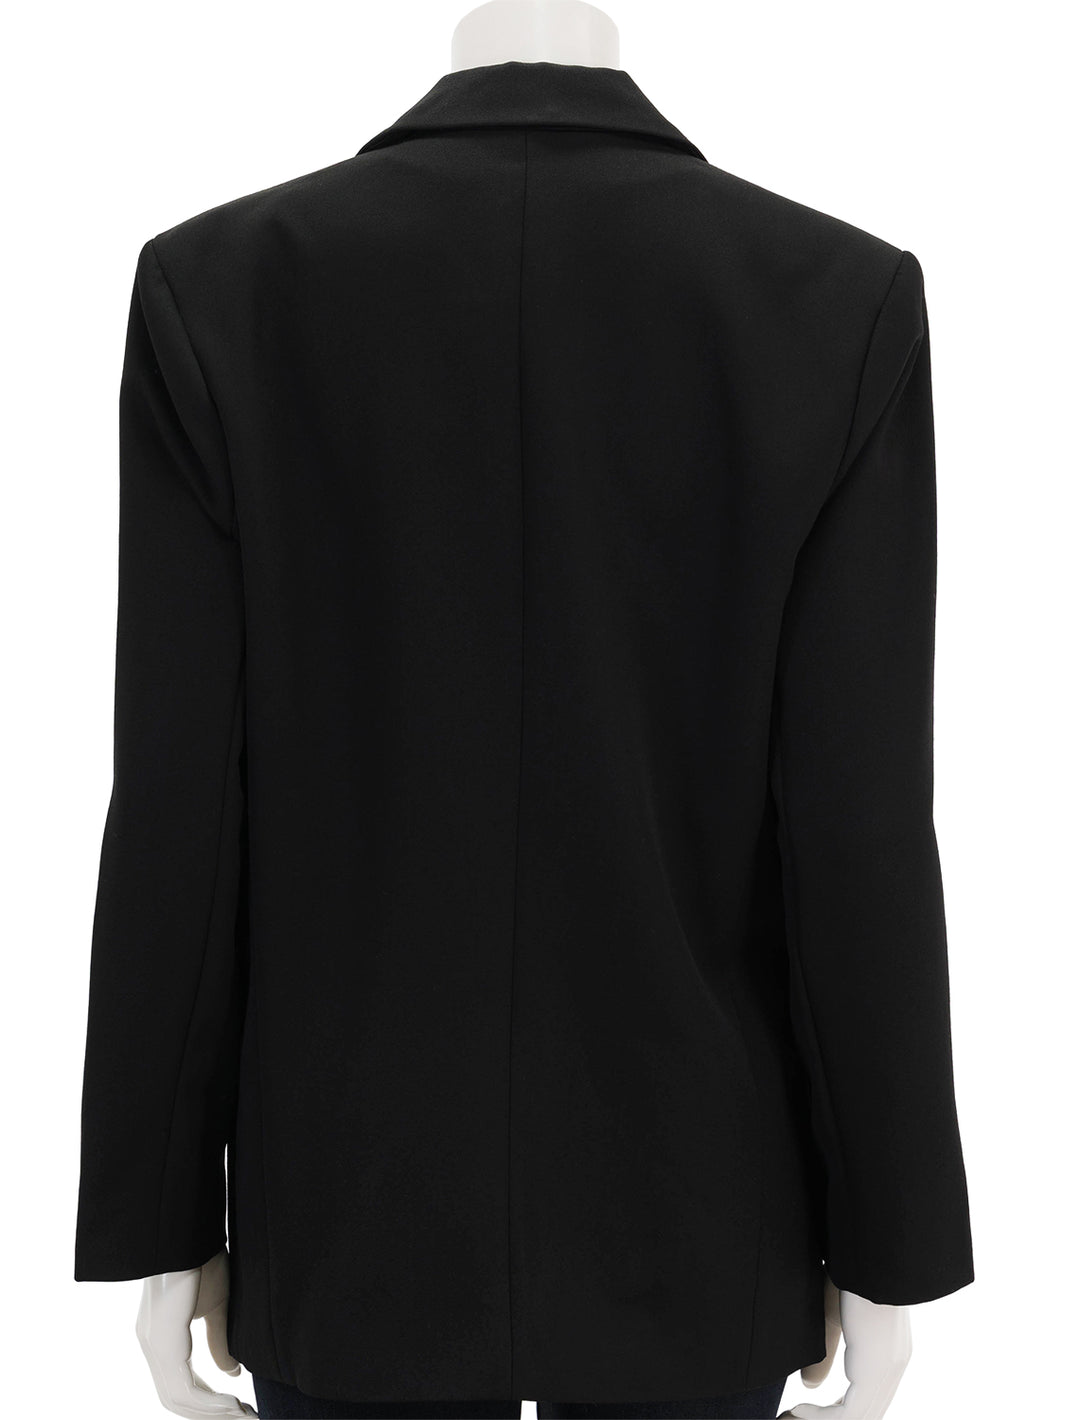 Back view of Anine Bing's quinn blazer in black.